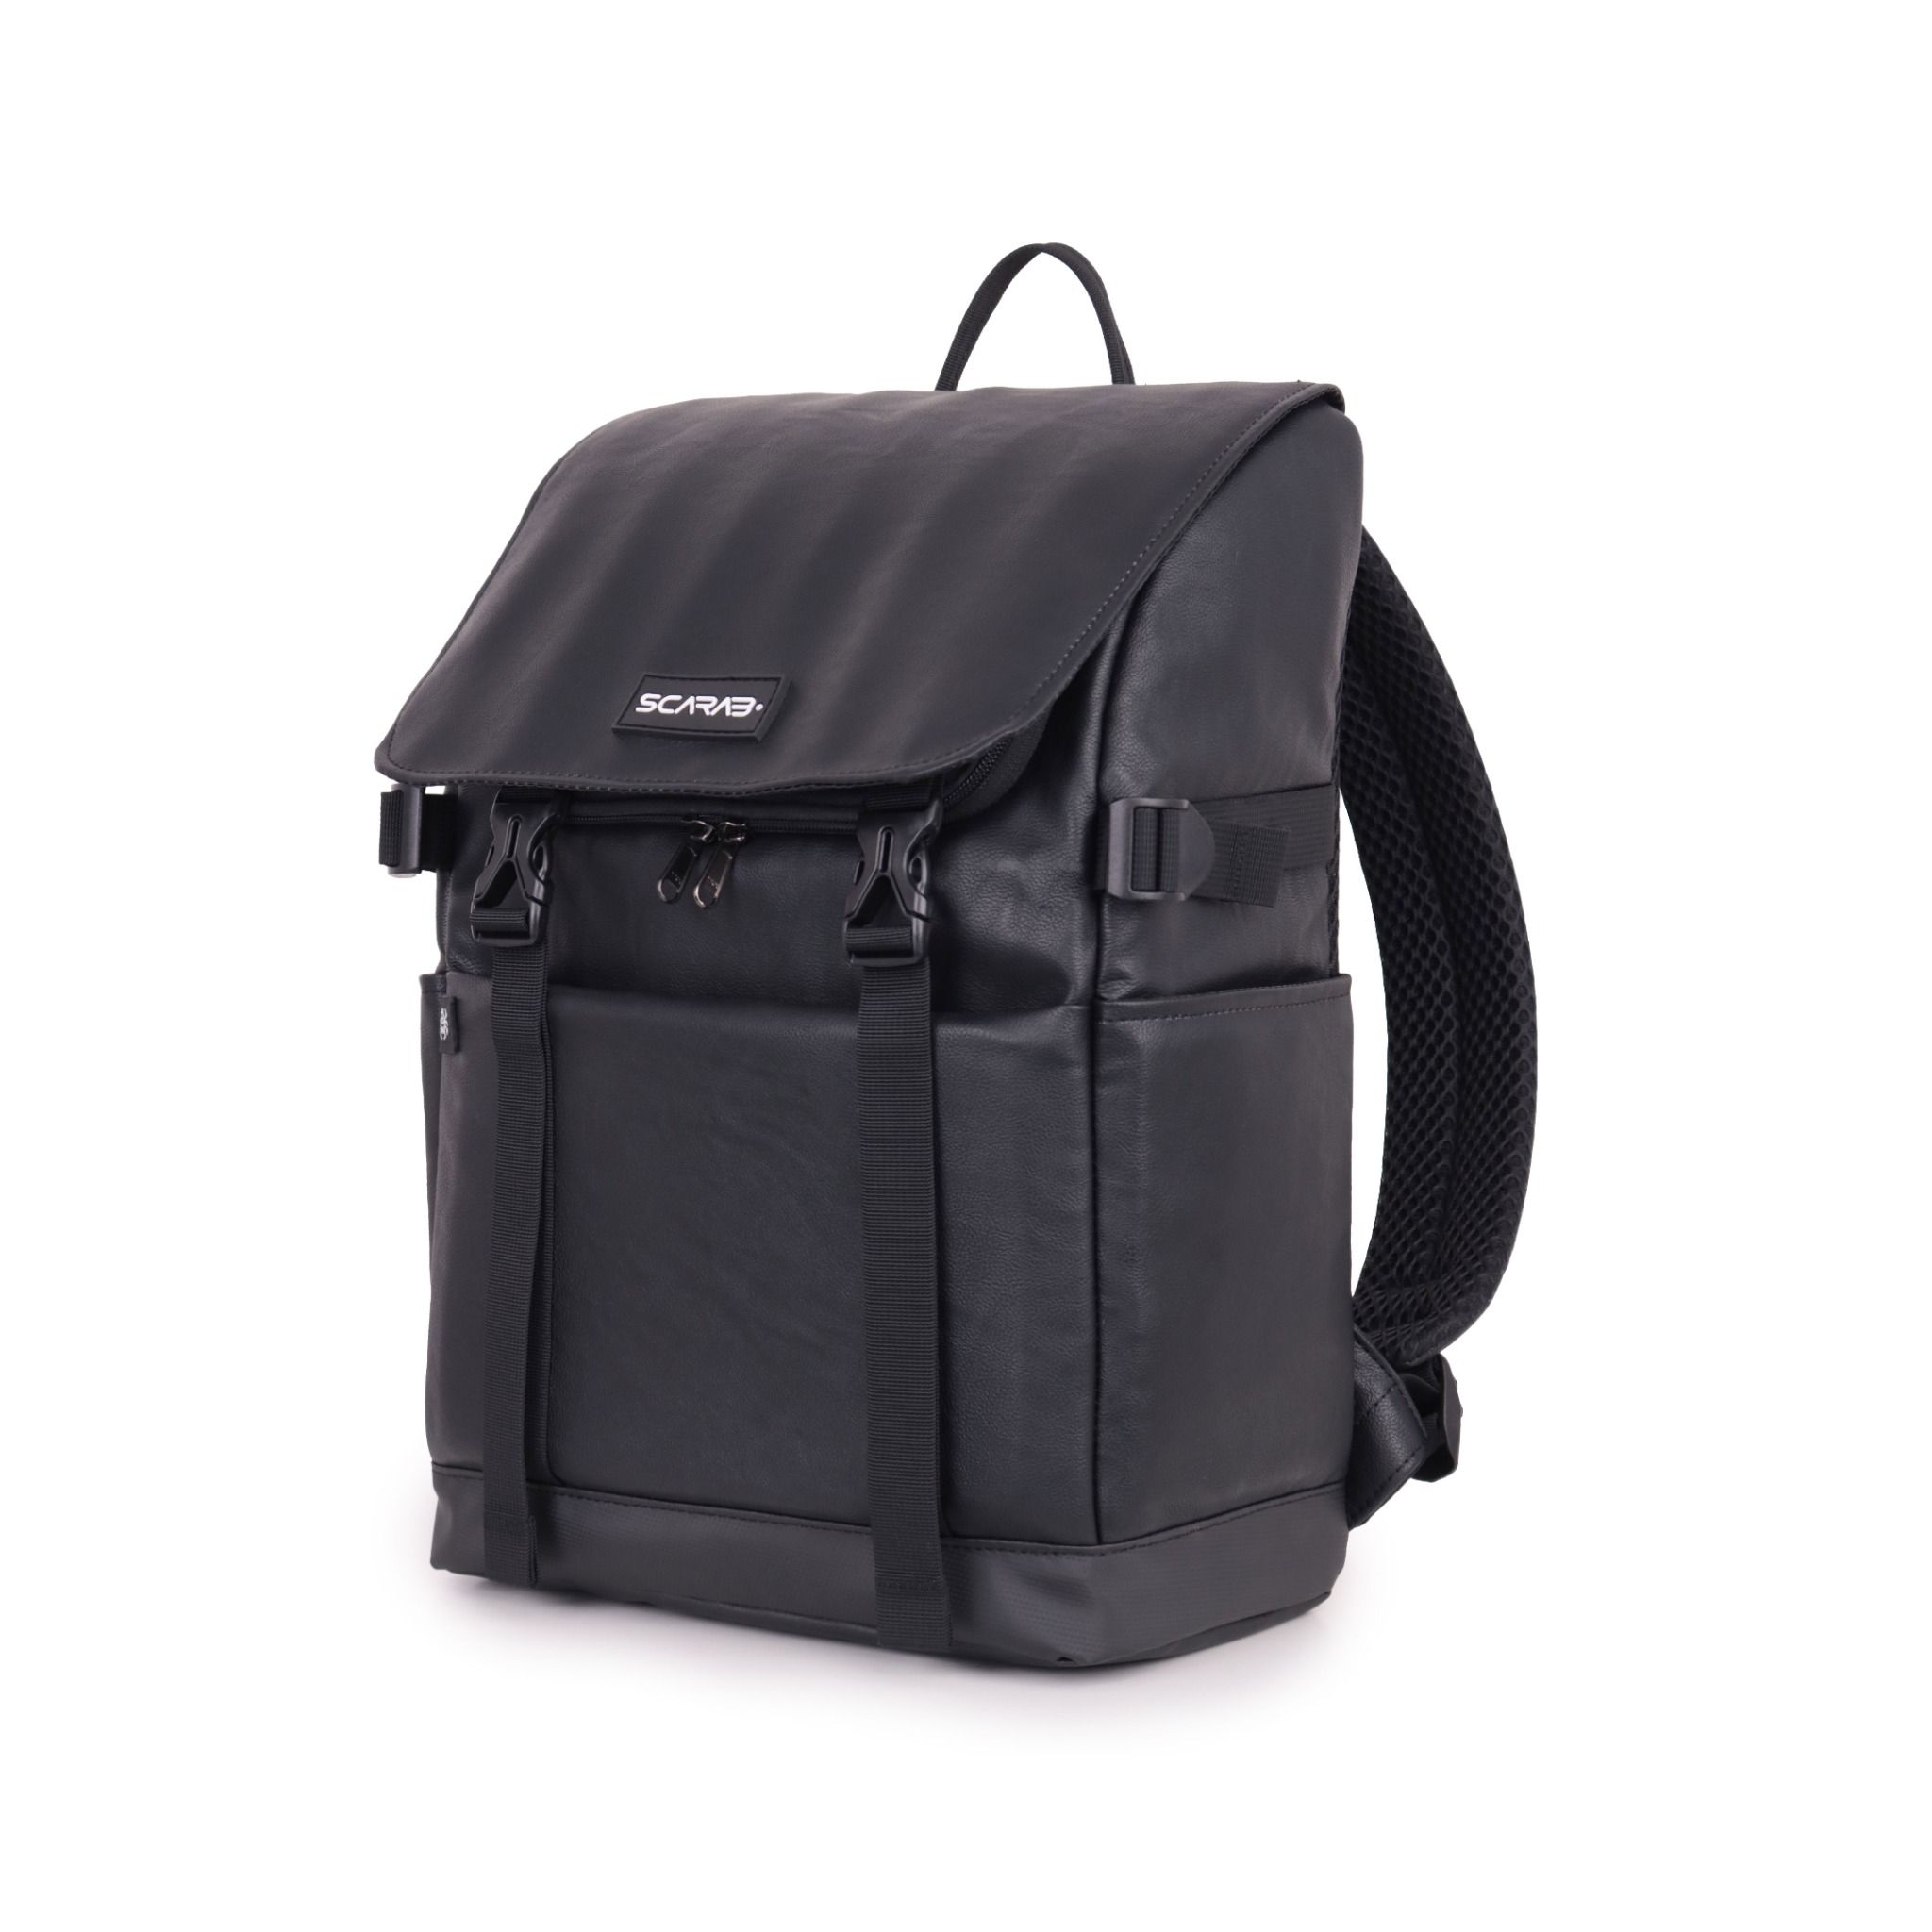  Urban Leather Backpack - Black Wrinkled 